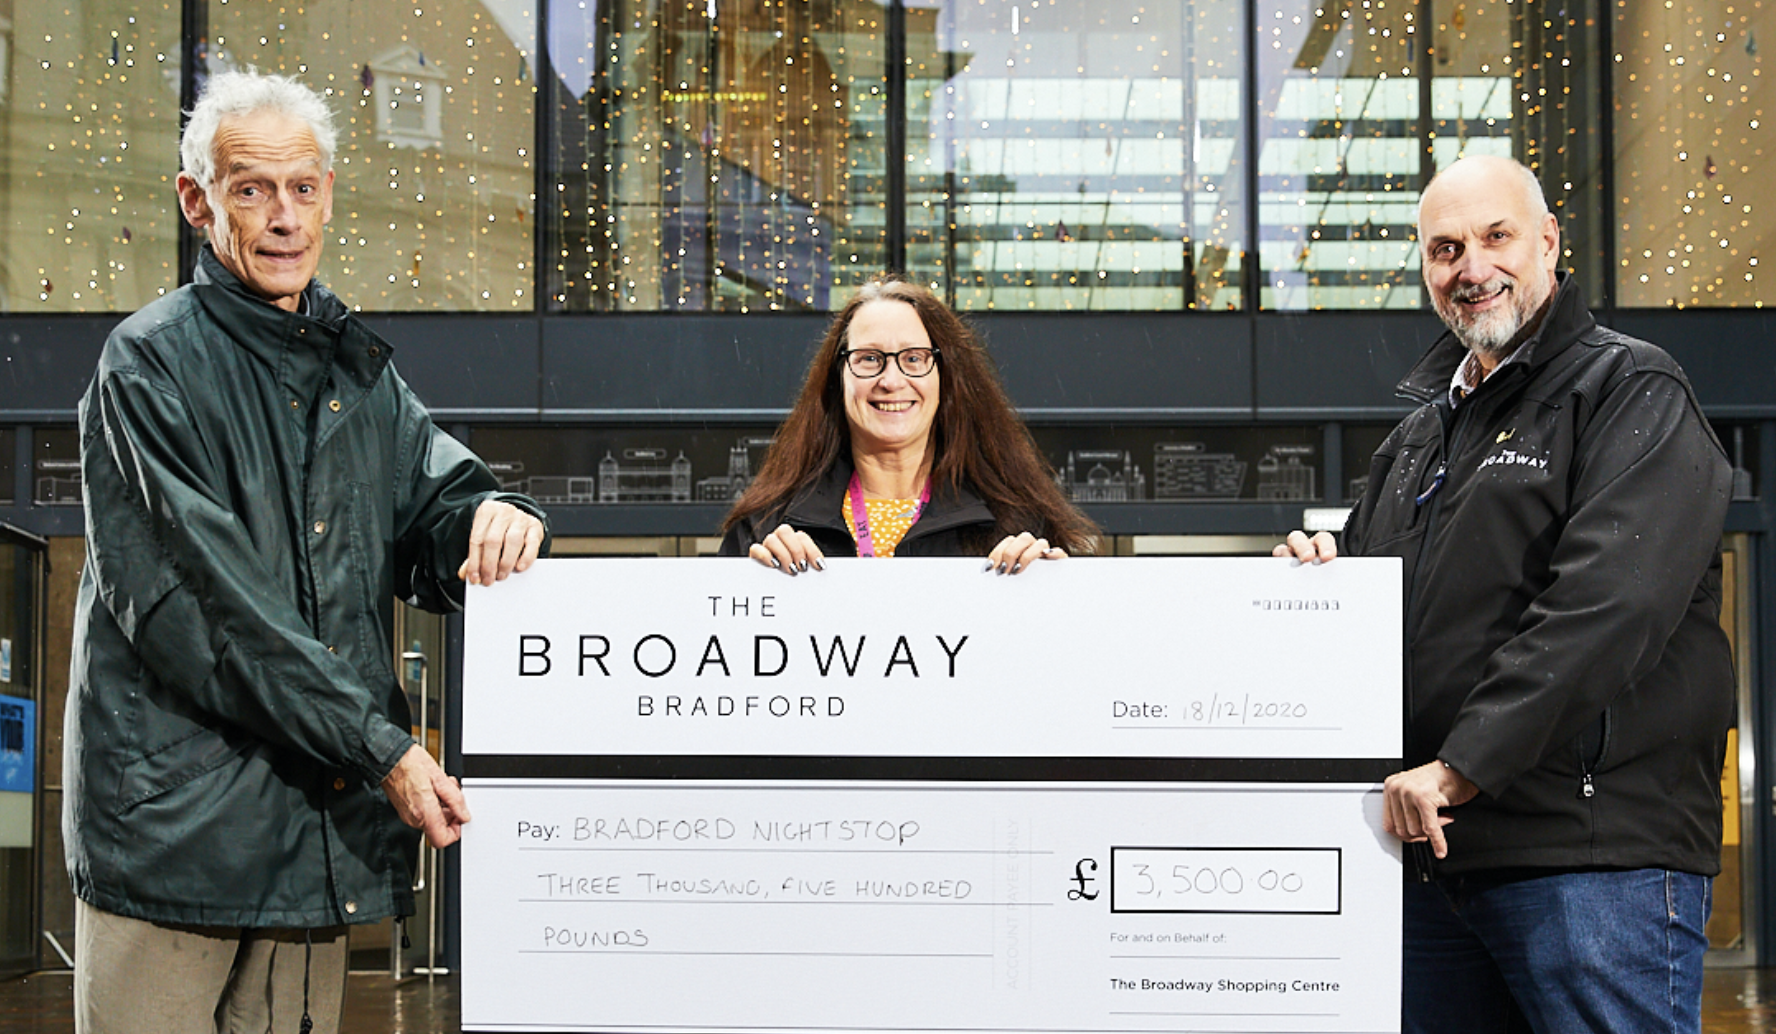 The Broadway,Bradford donates funds to Bradford Nightstop